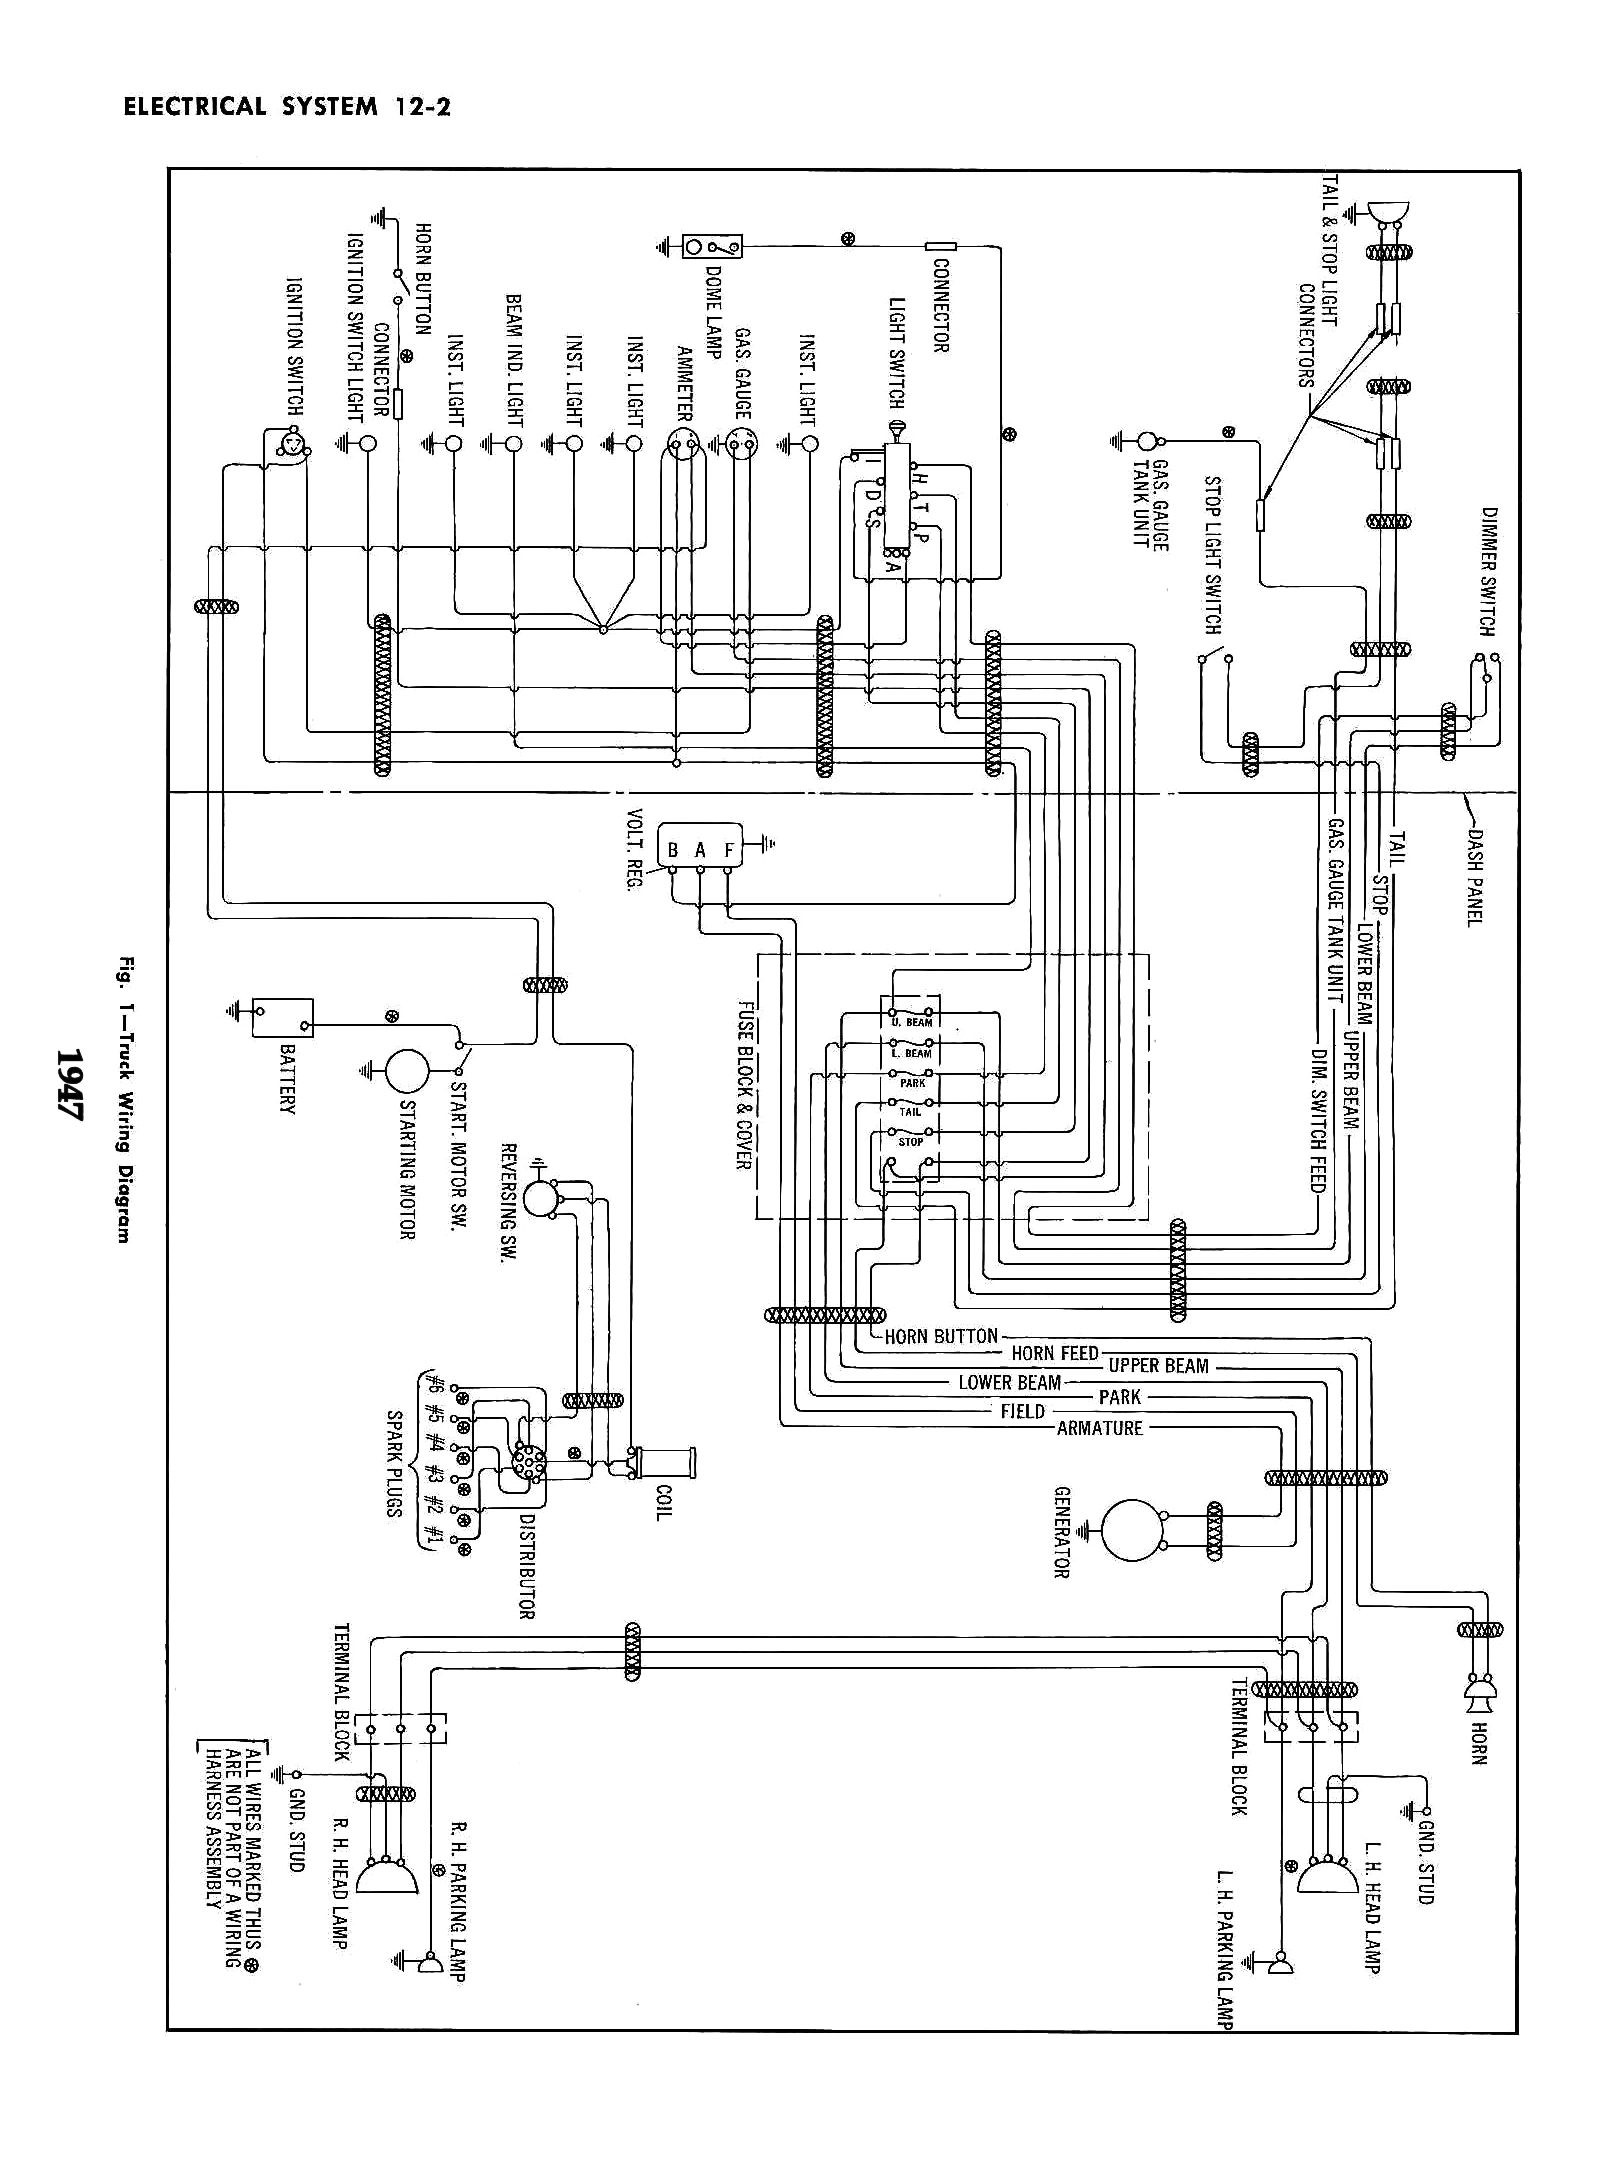 1953 Chevy Truck Wiring Diagram Chevy Wiring Diagrams Of 1953 Chevy Truck Wiring Diagram